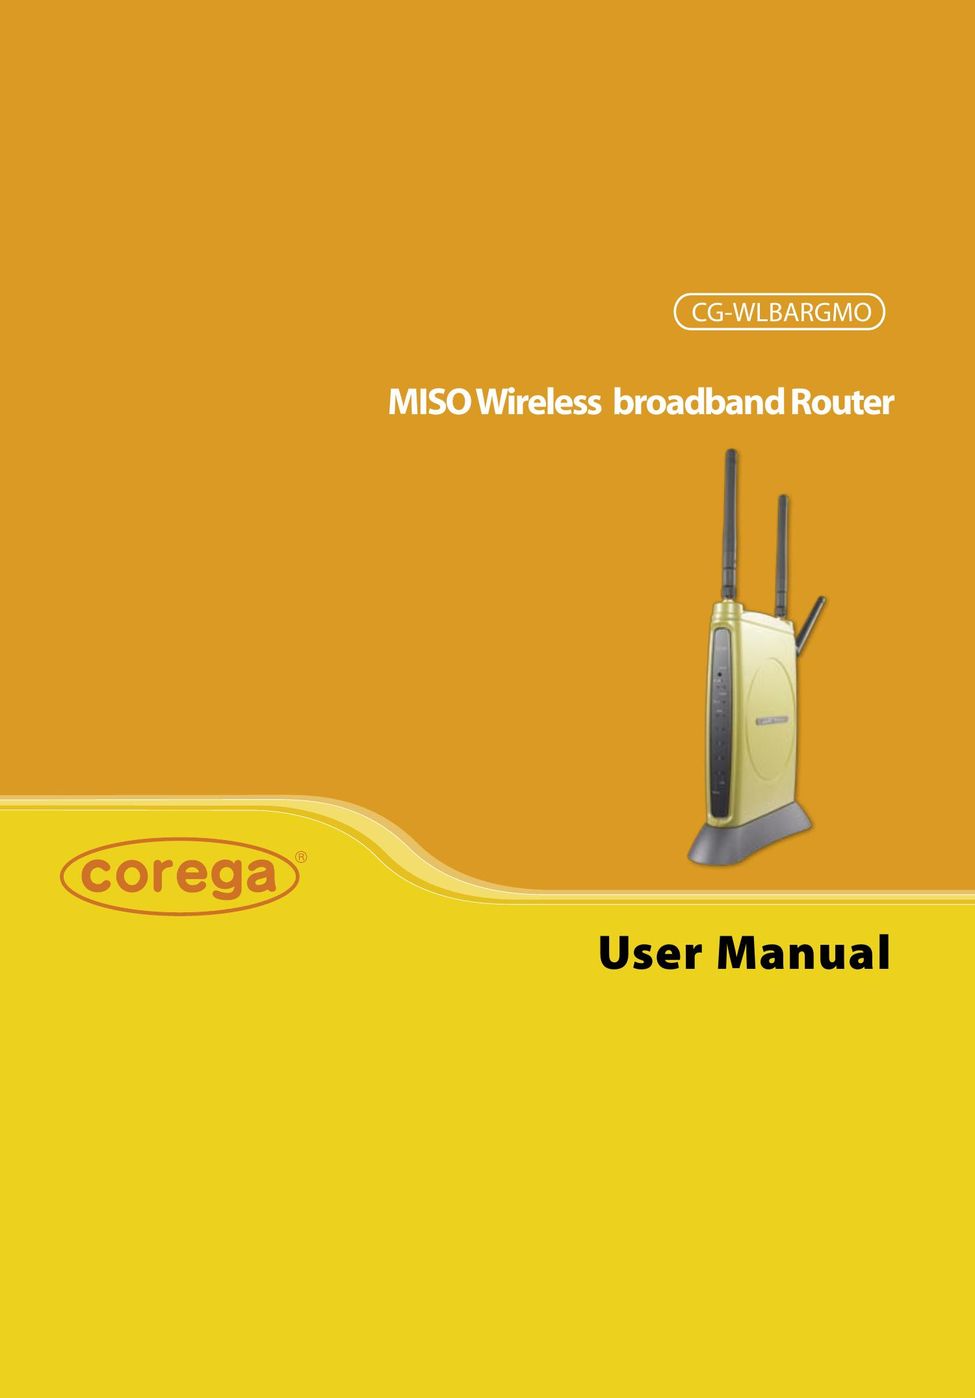 Corega CG-WLBARGMO Network Router User Manual